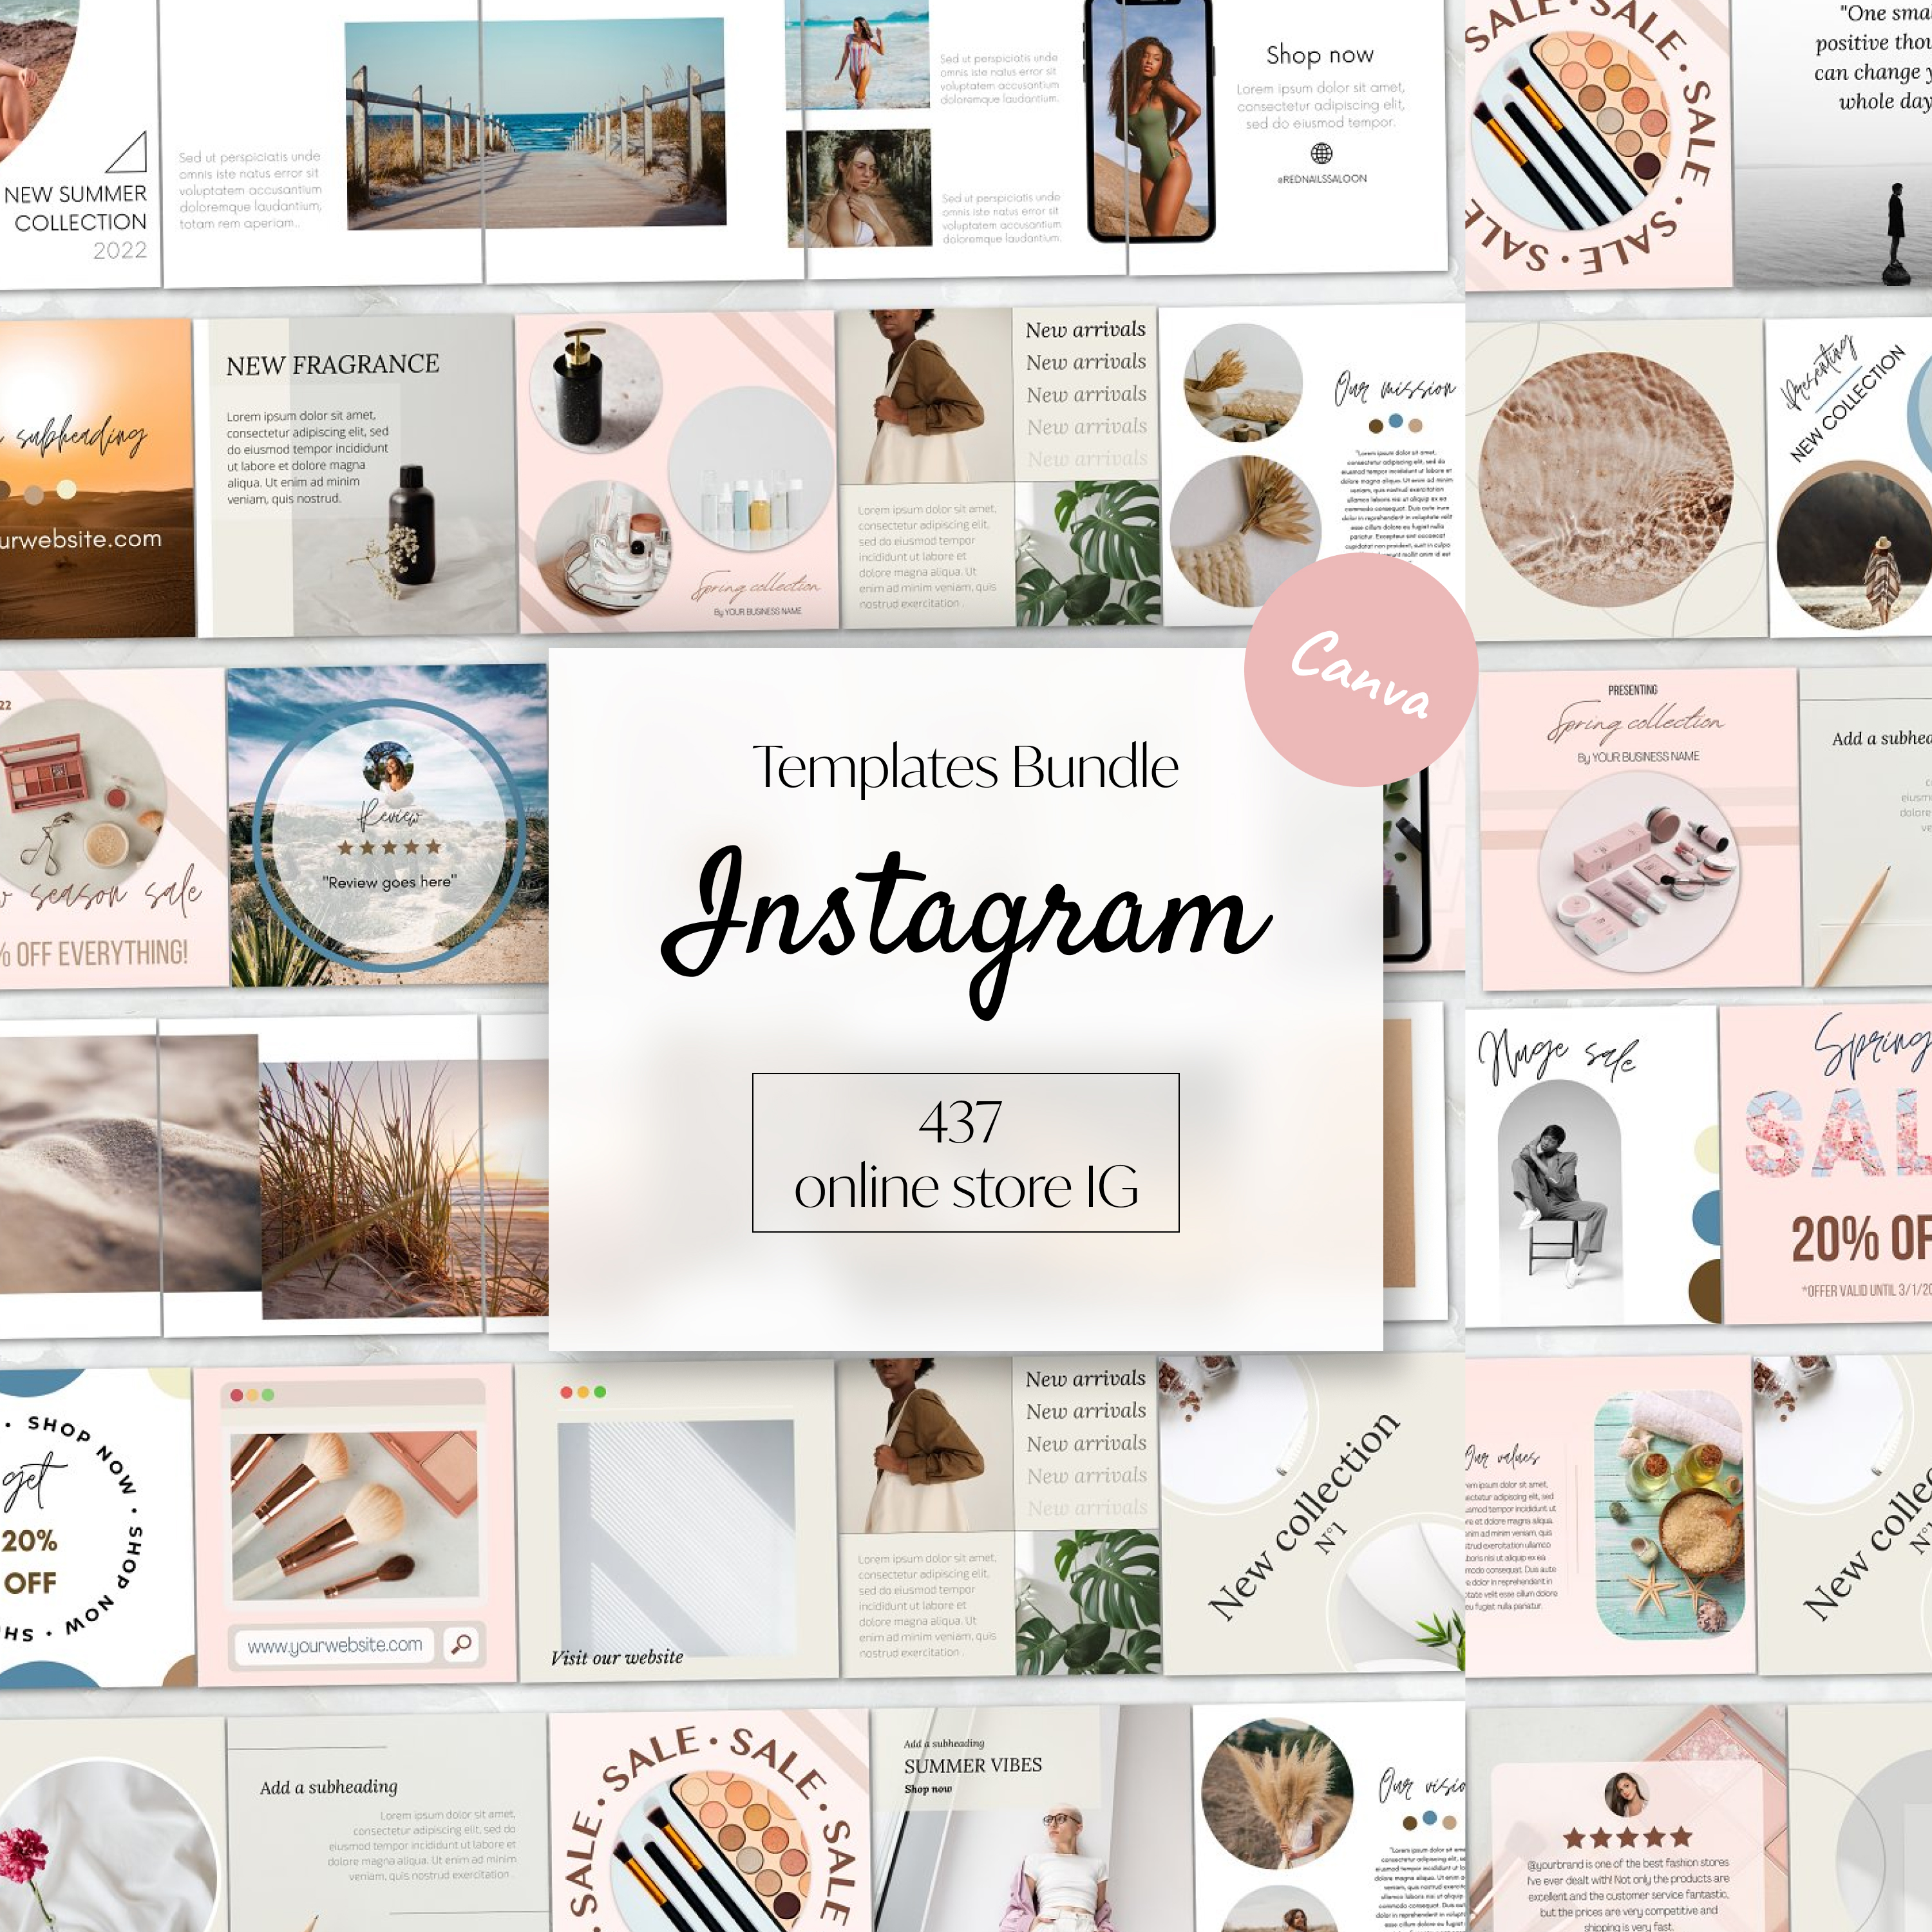 Prints of canva instagram templates bundle.